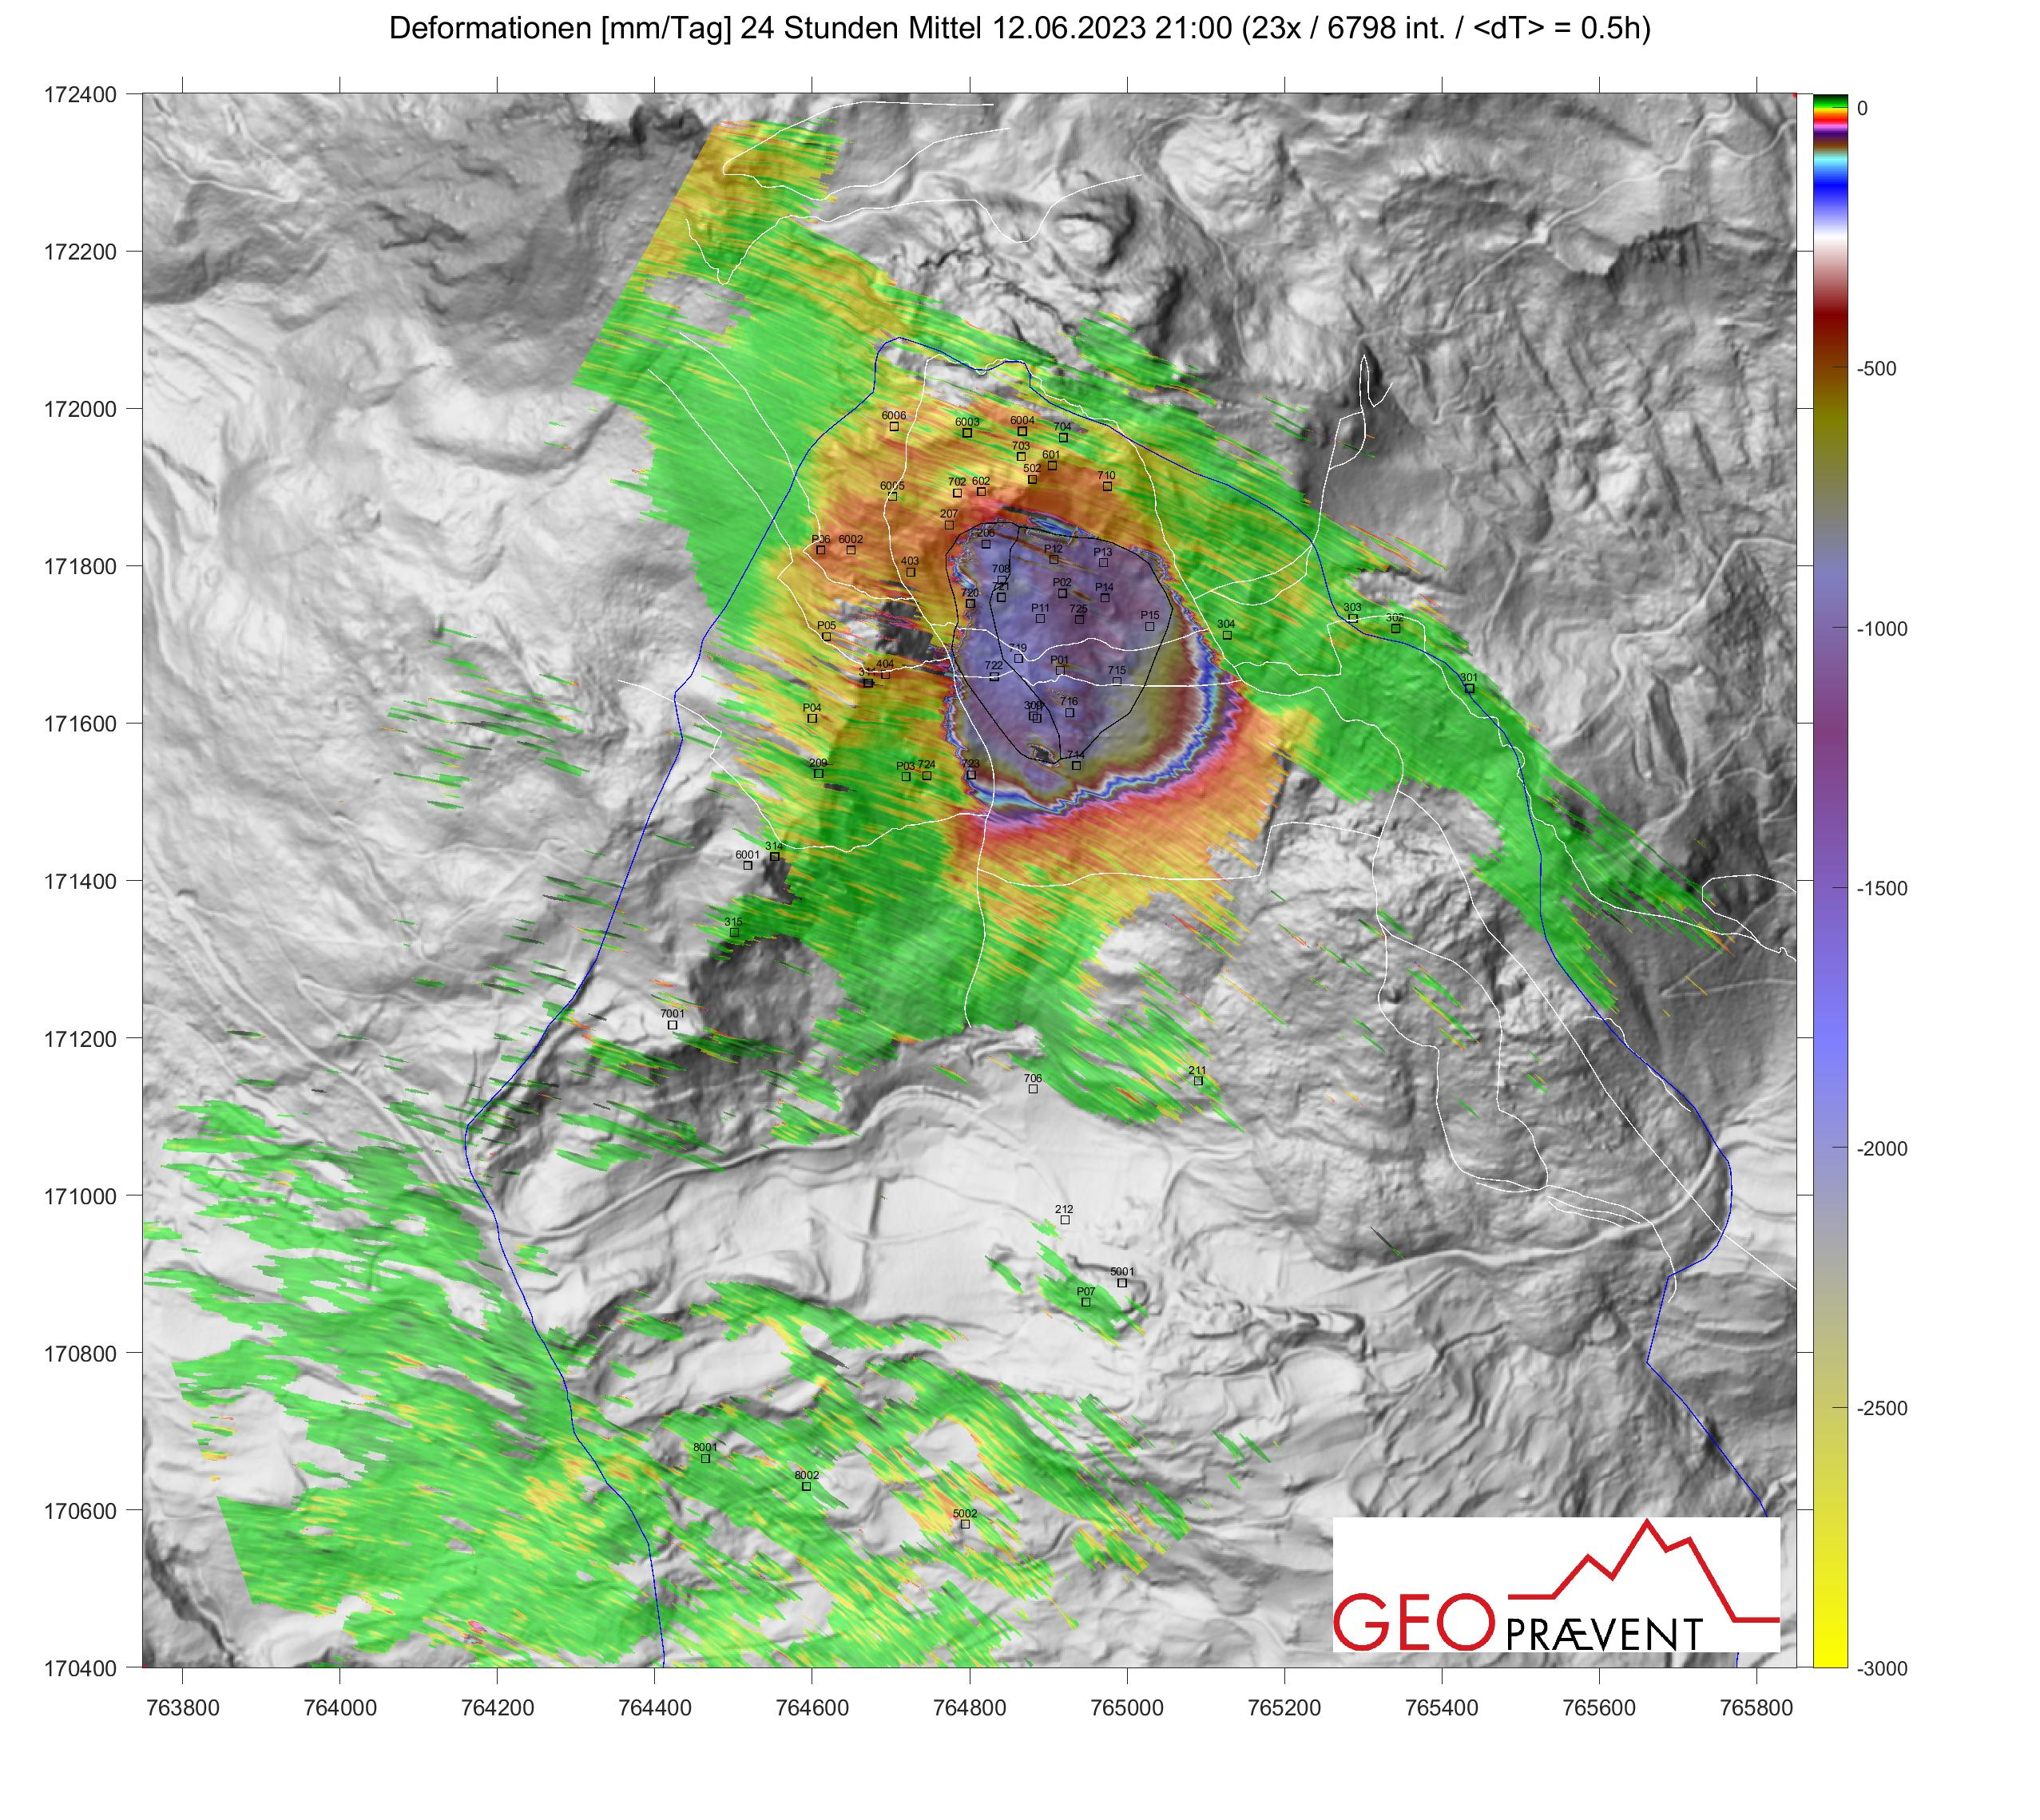 Figure 5: Map view of LOS displacements on June 12, 2023 from Georadar 24h-AIM interpretation